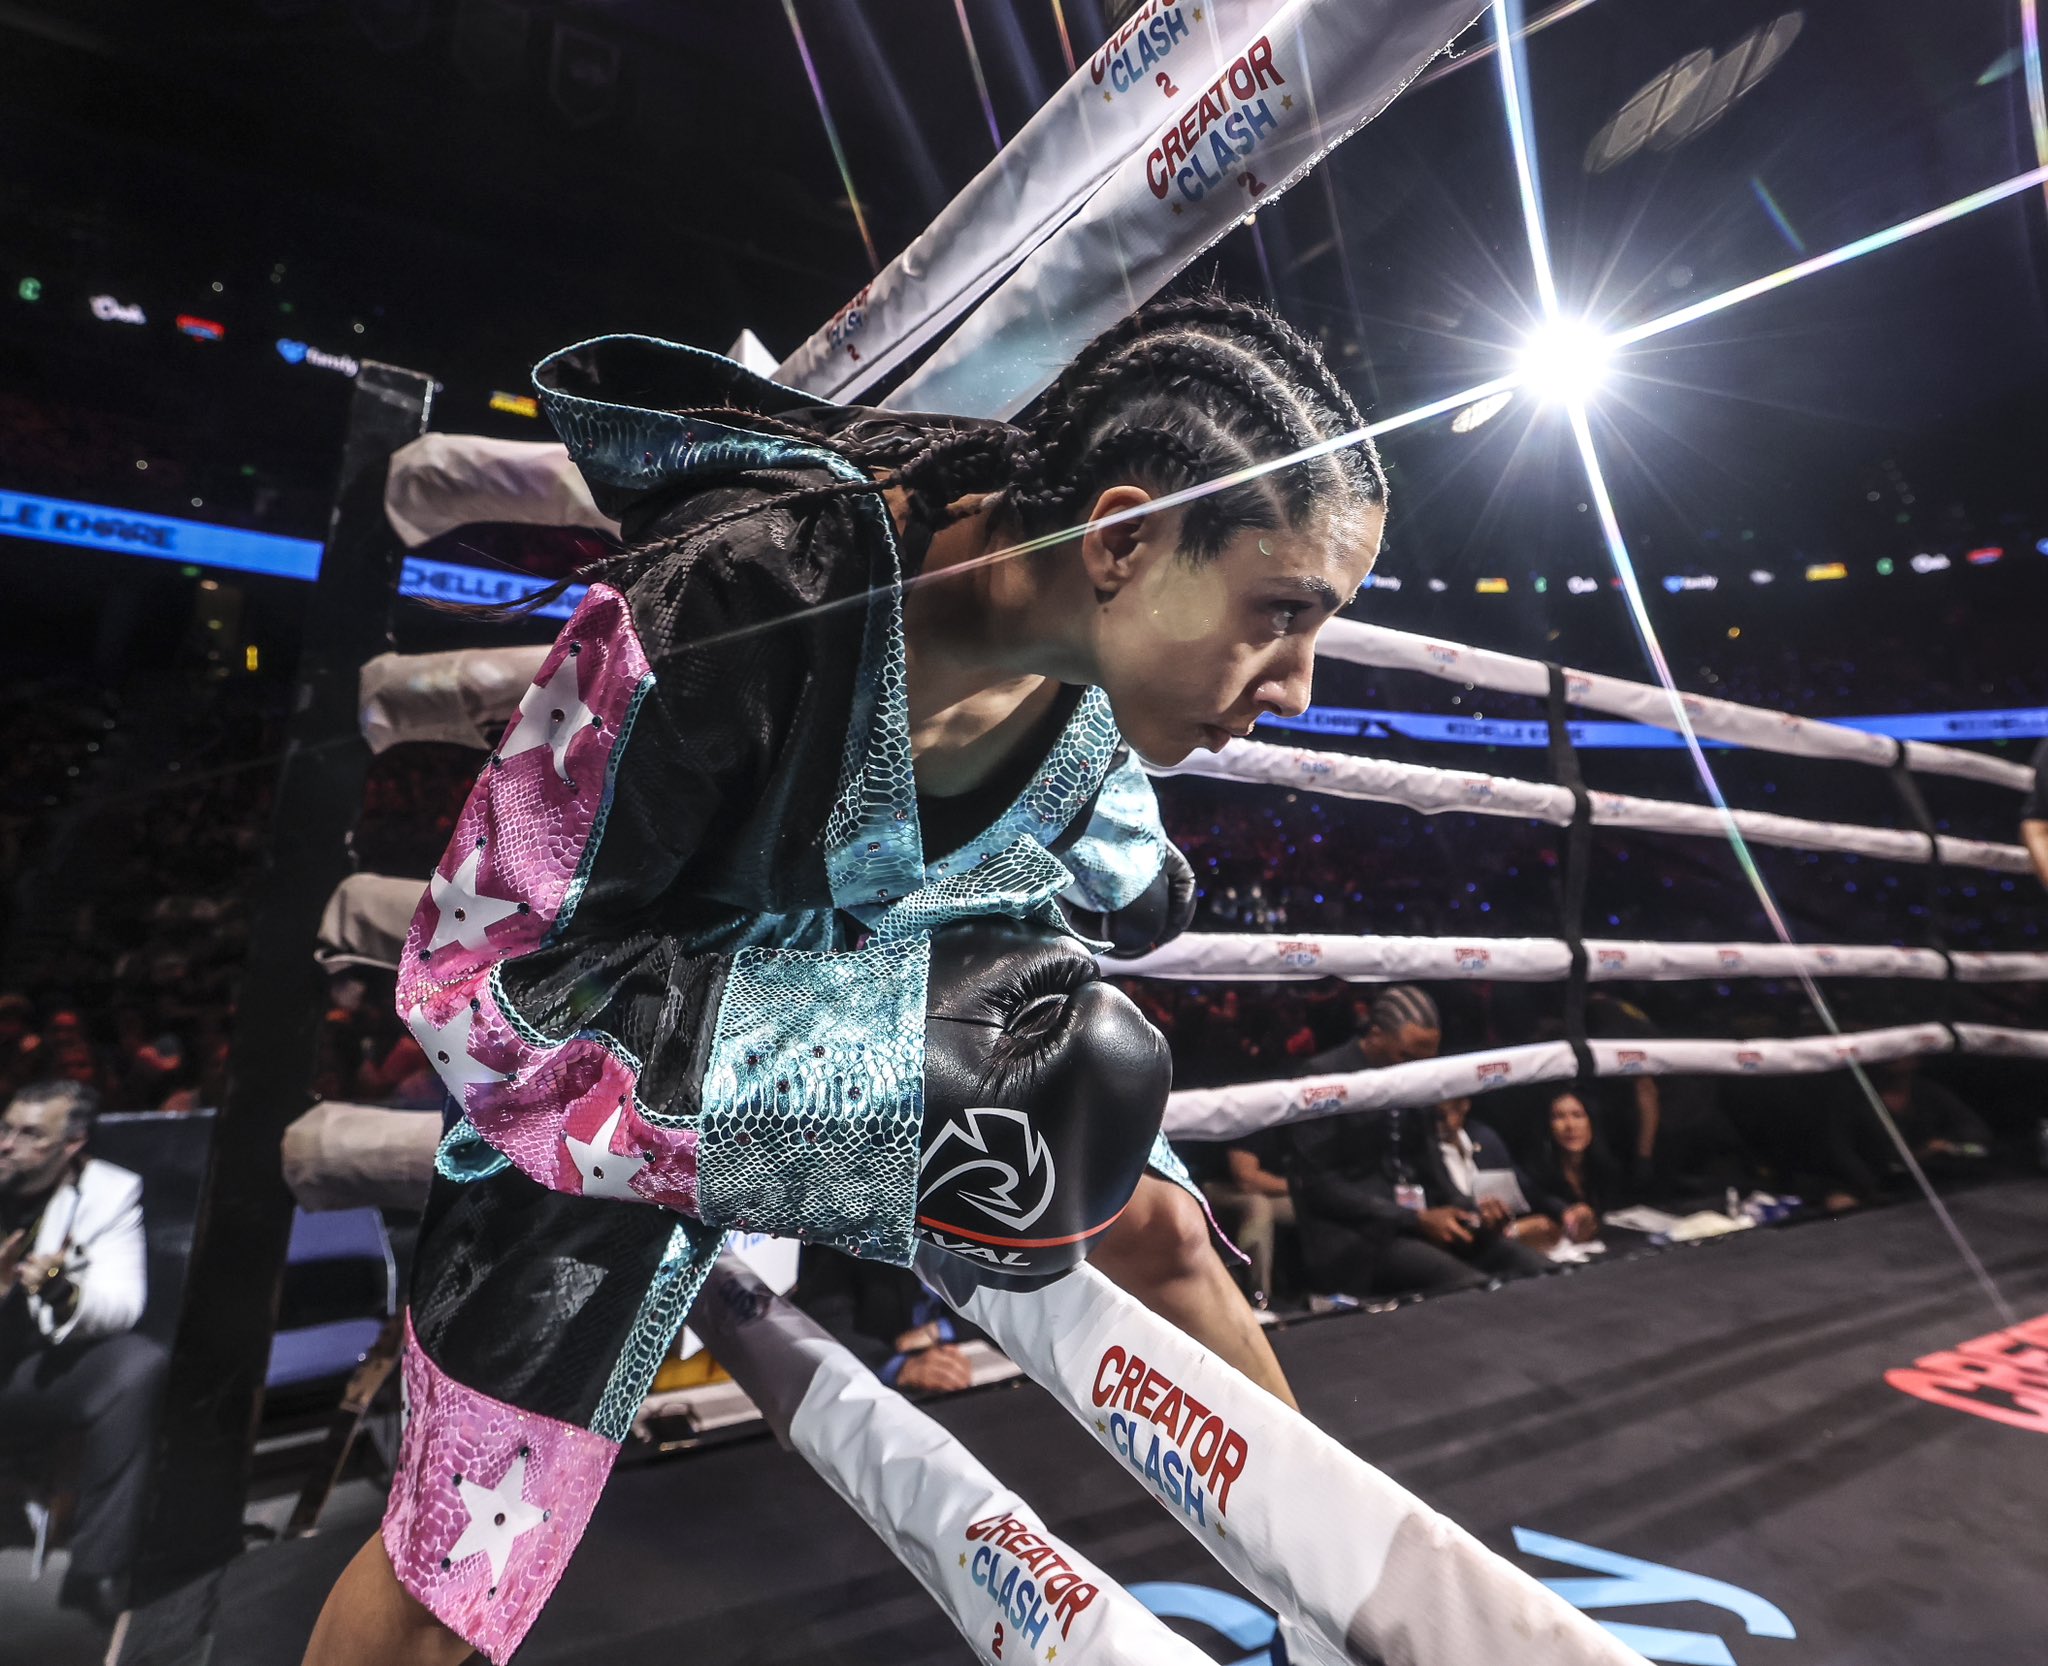 Boxing Fight: Andrea Botez vs Michelle Khare 